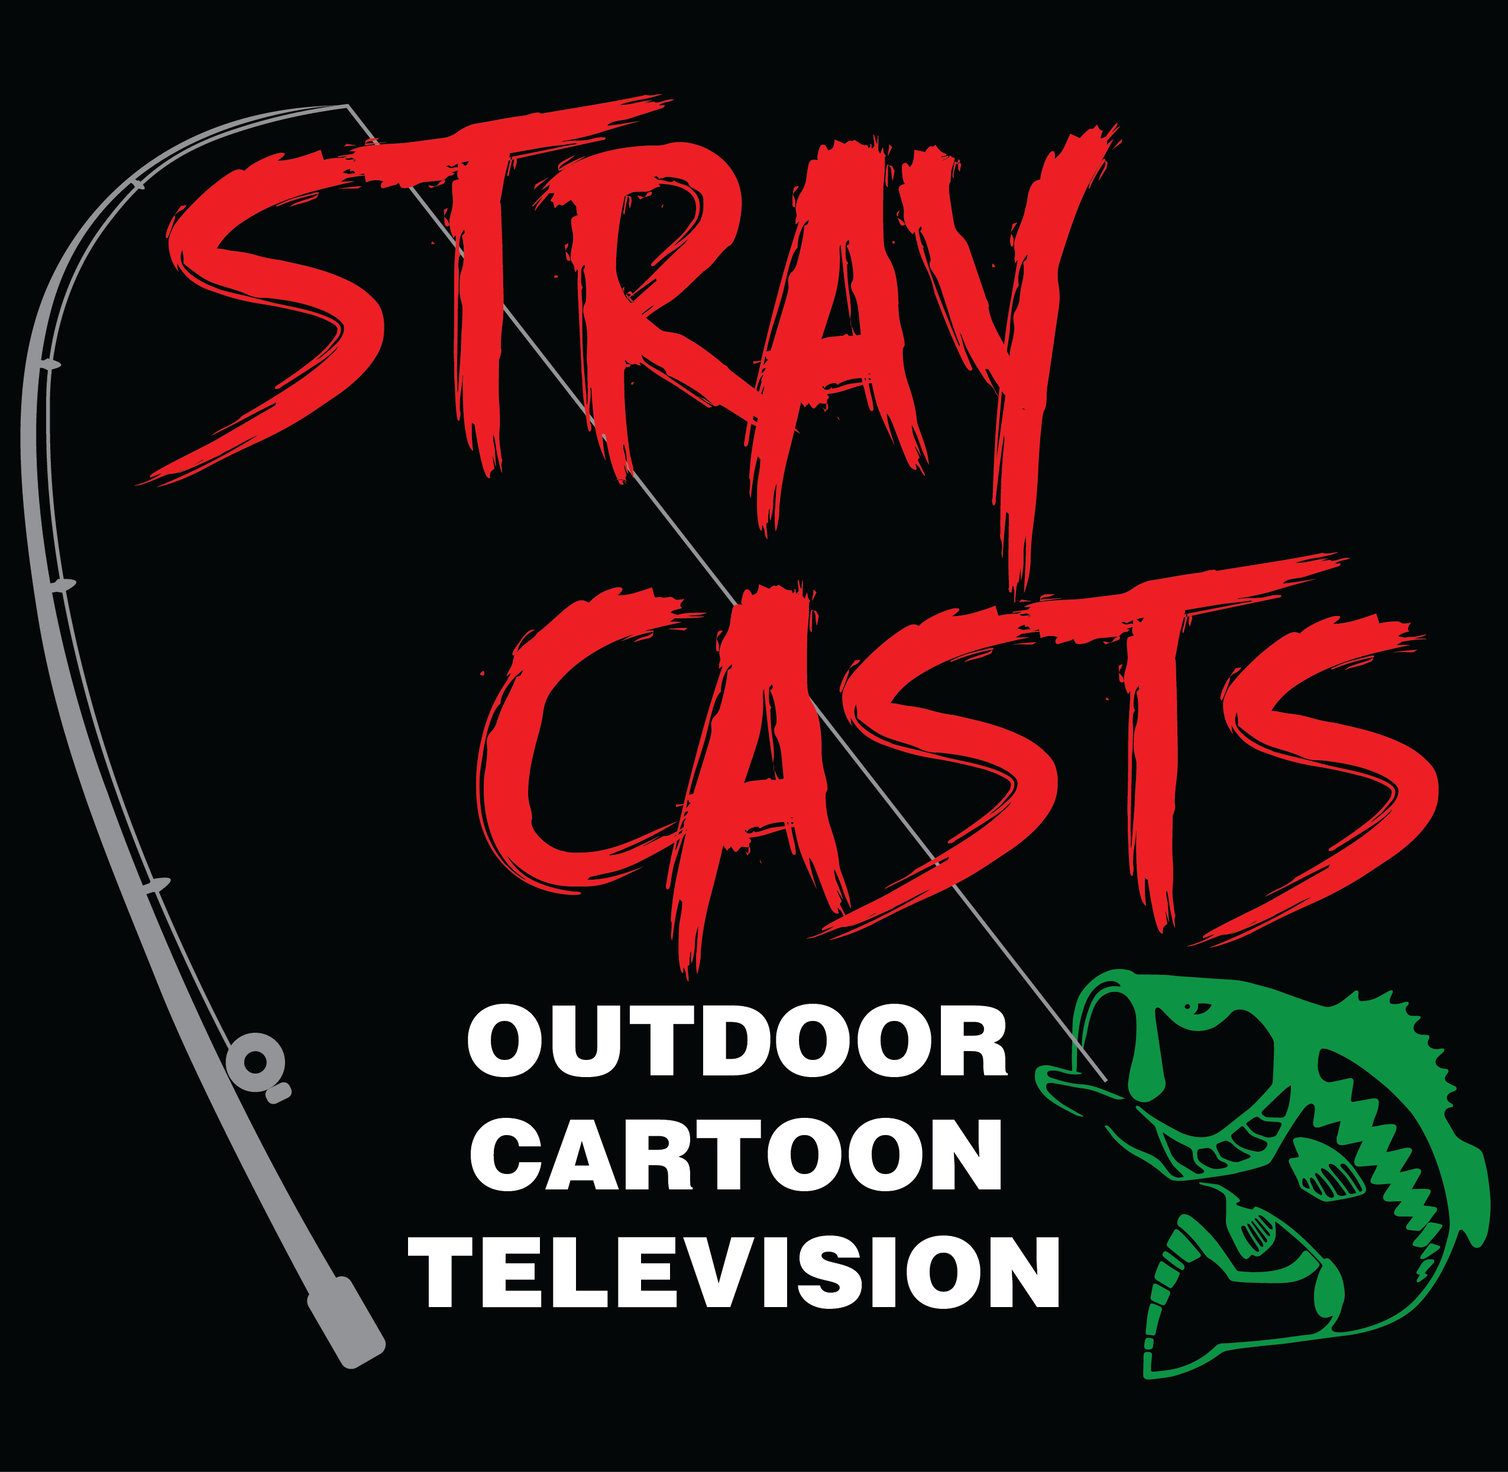 StrayCasts Outdoor Cartoon Television